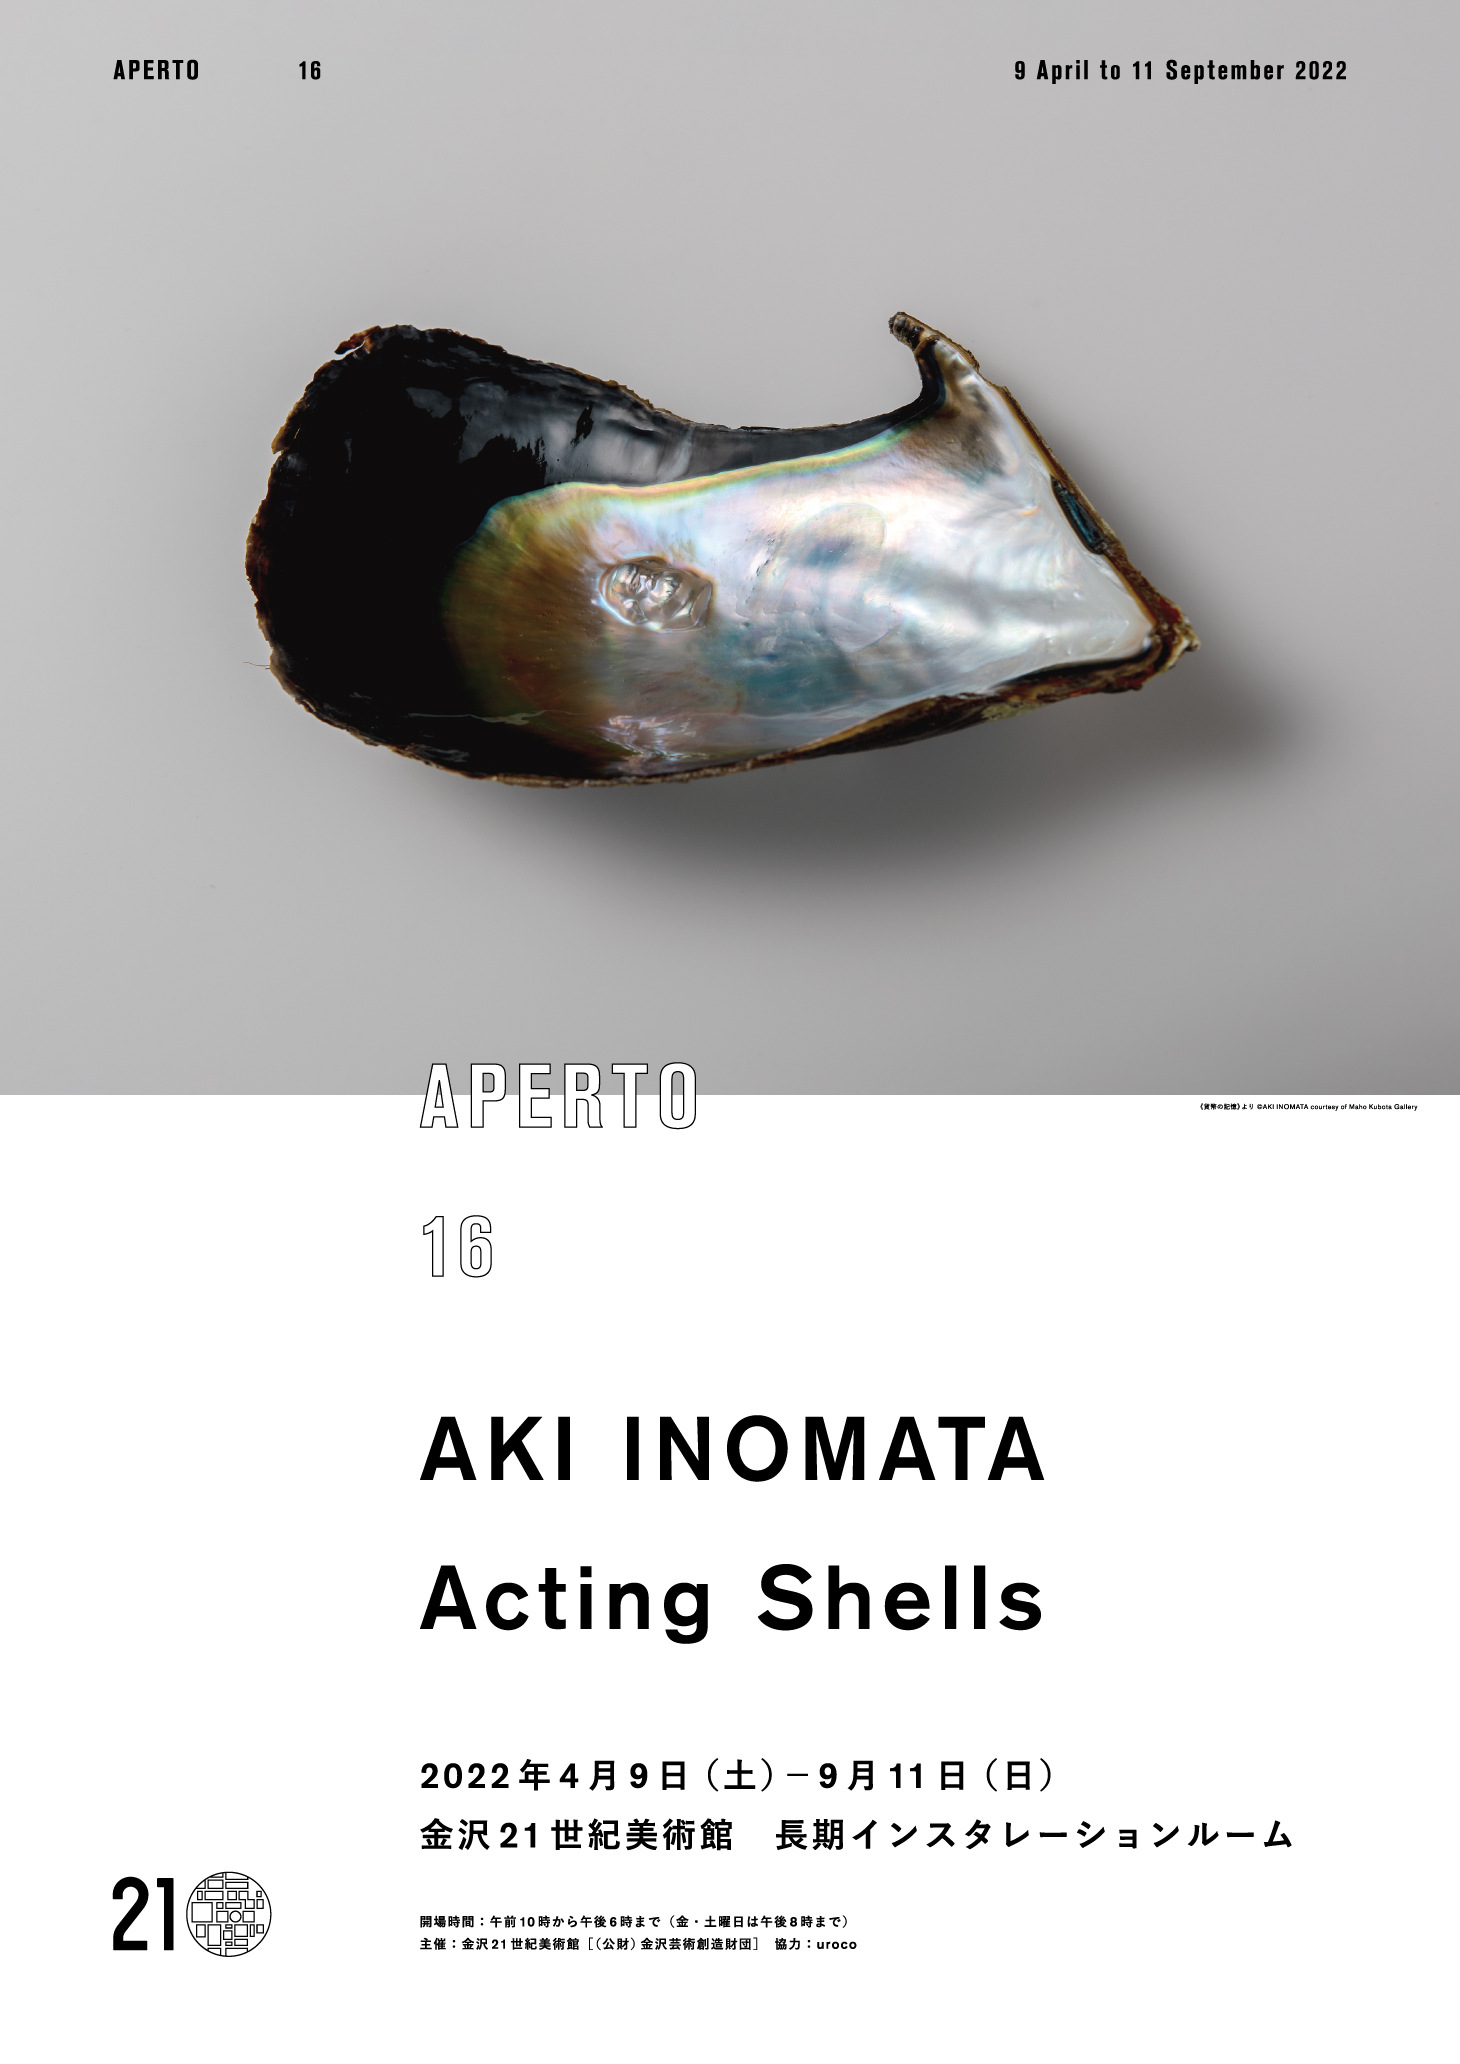 Acting Shells